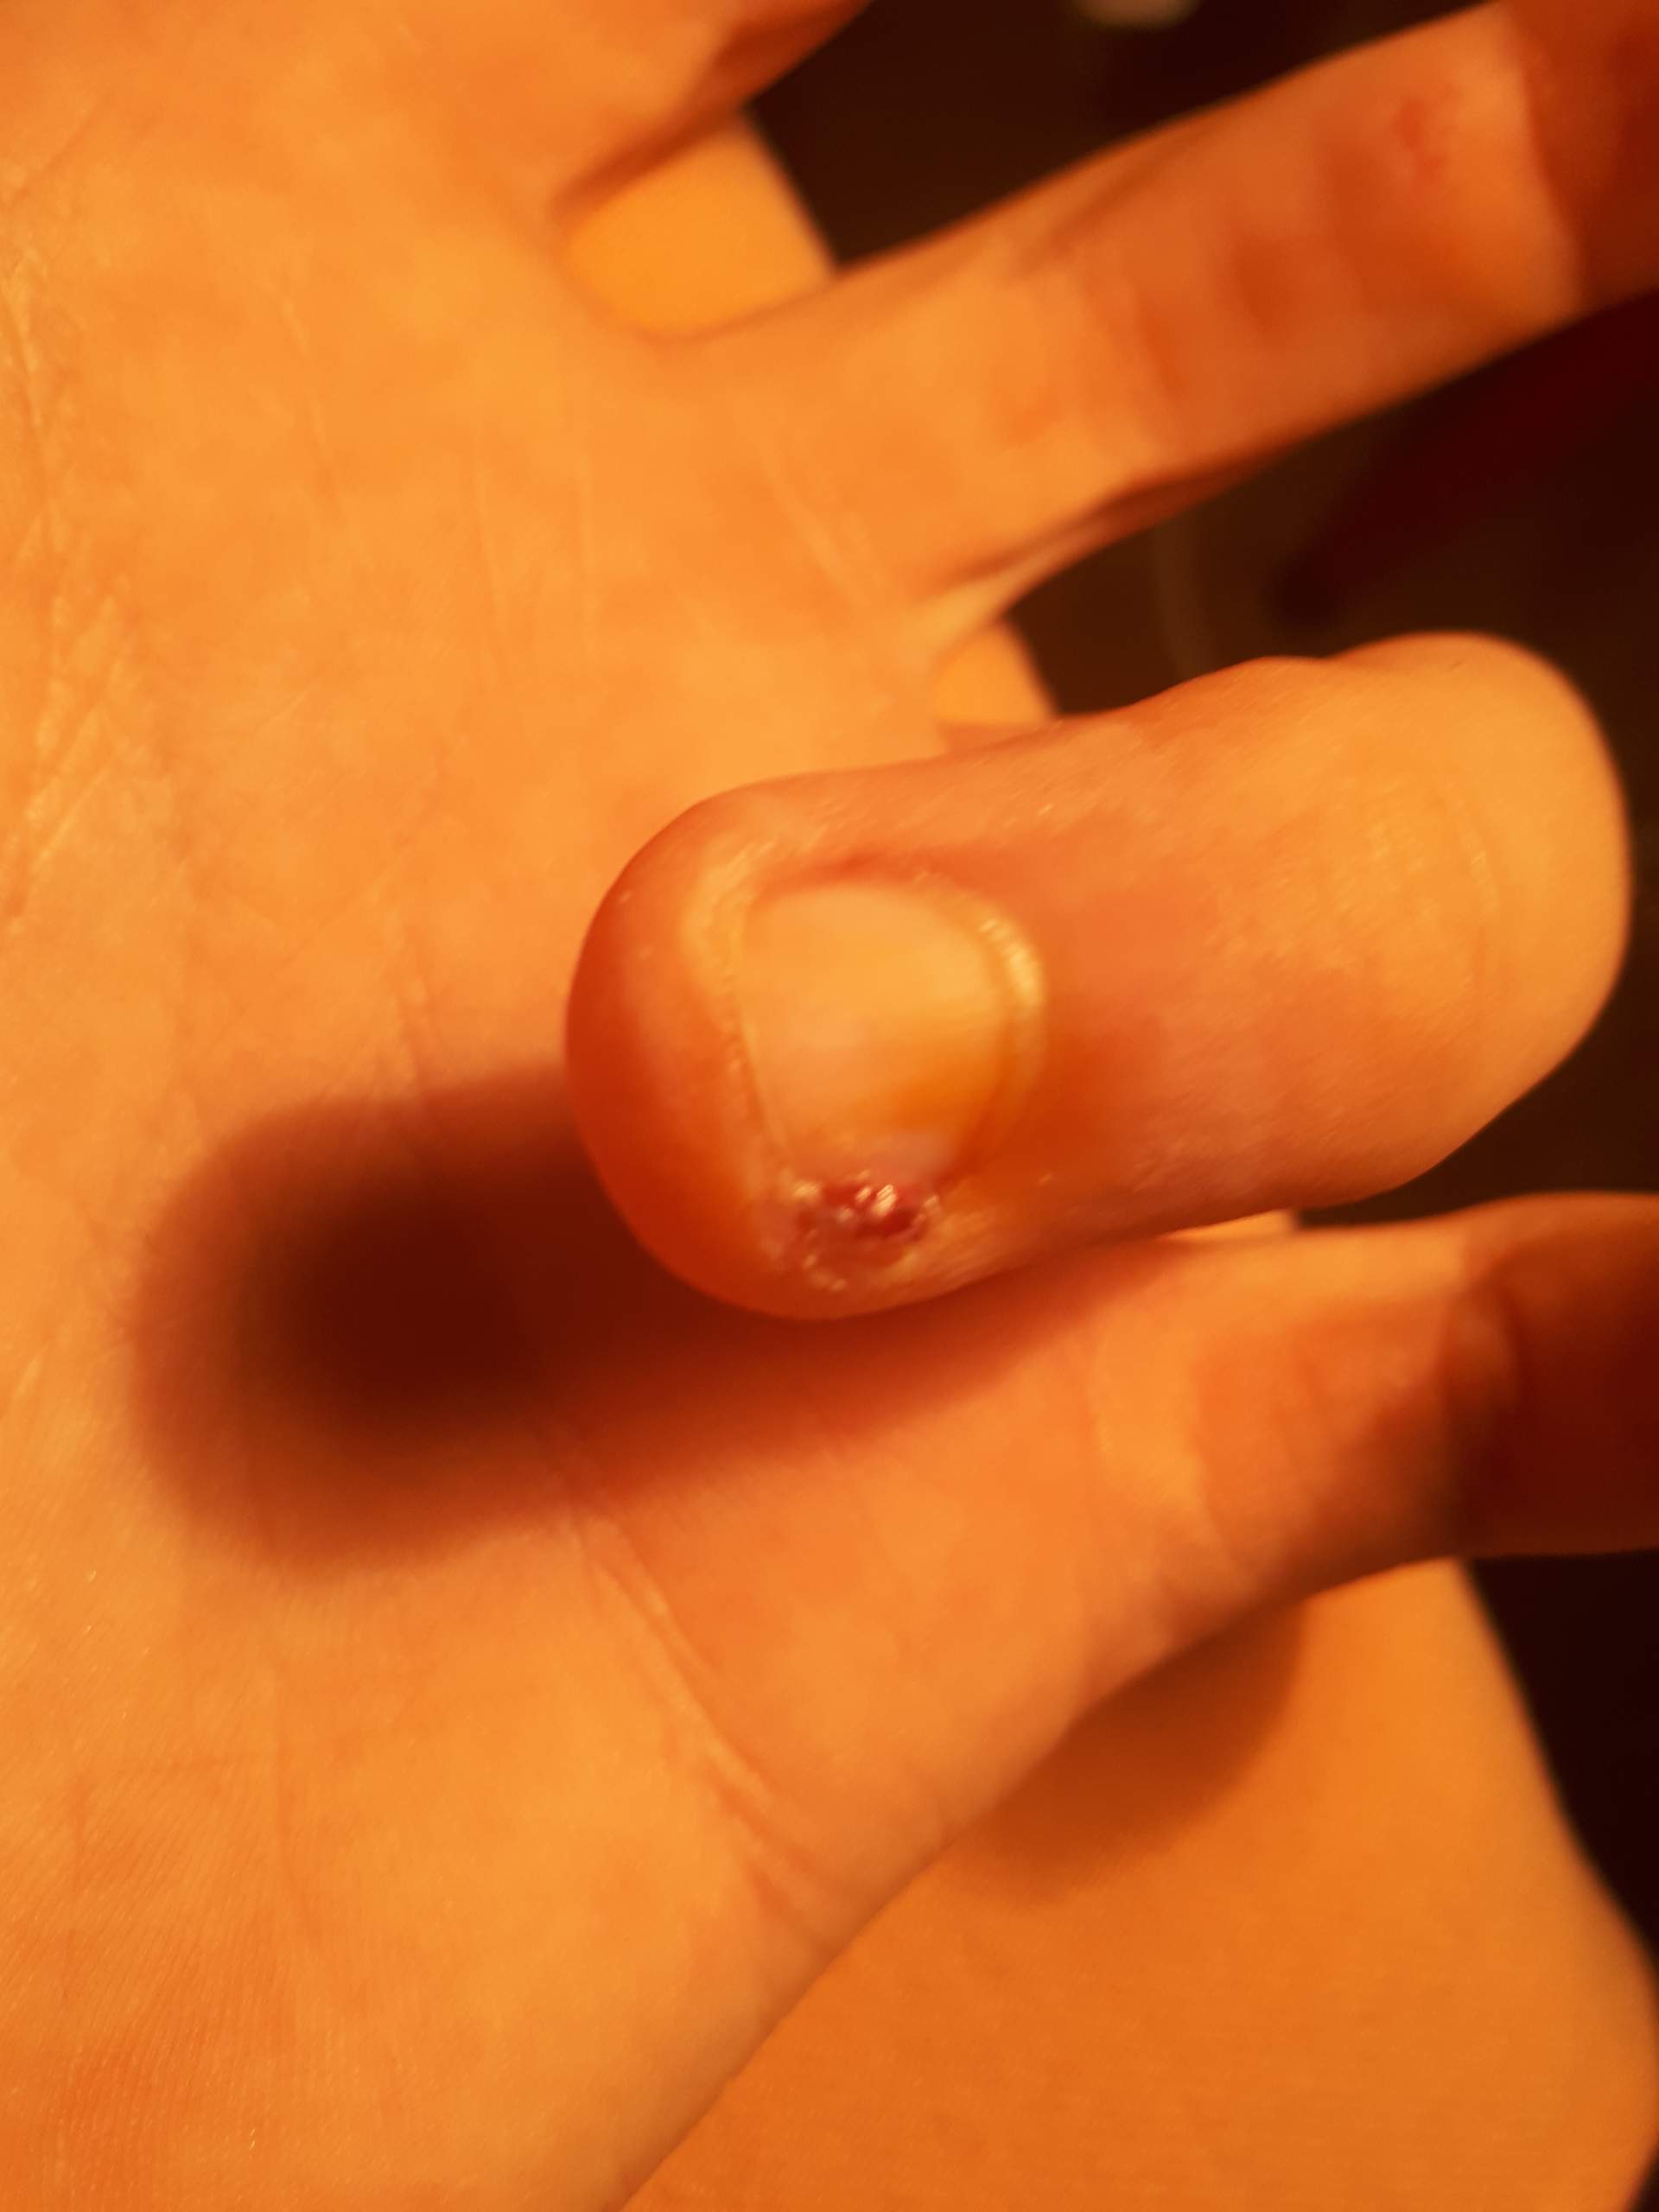 Finger nagelbettentzündung wildes fleisch Nagelbettentzündung